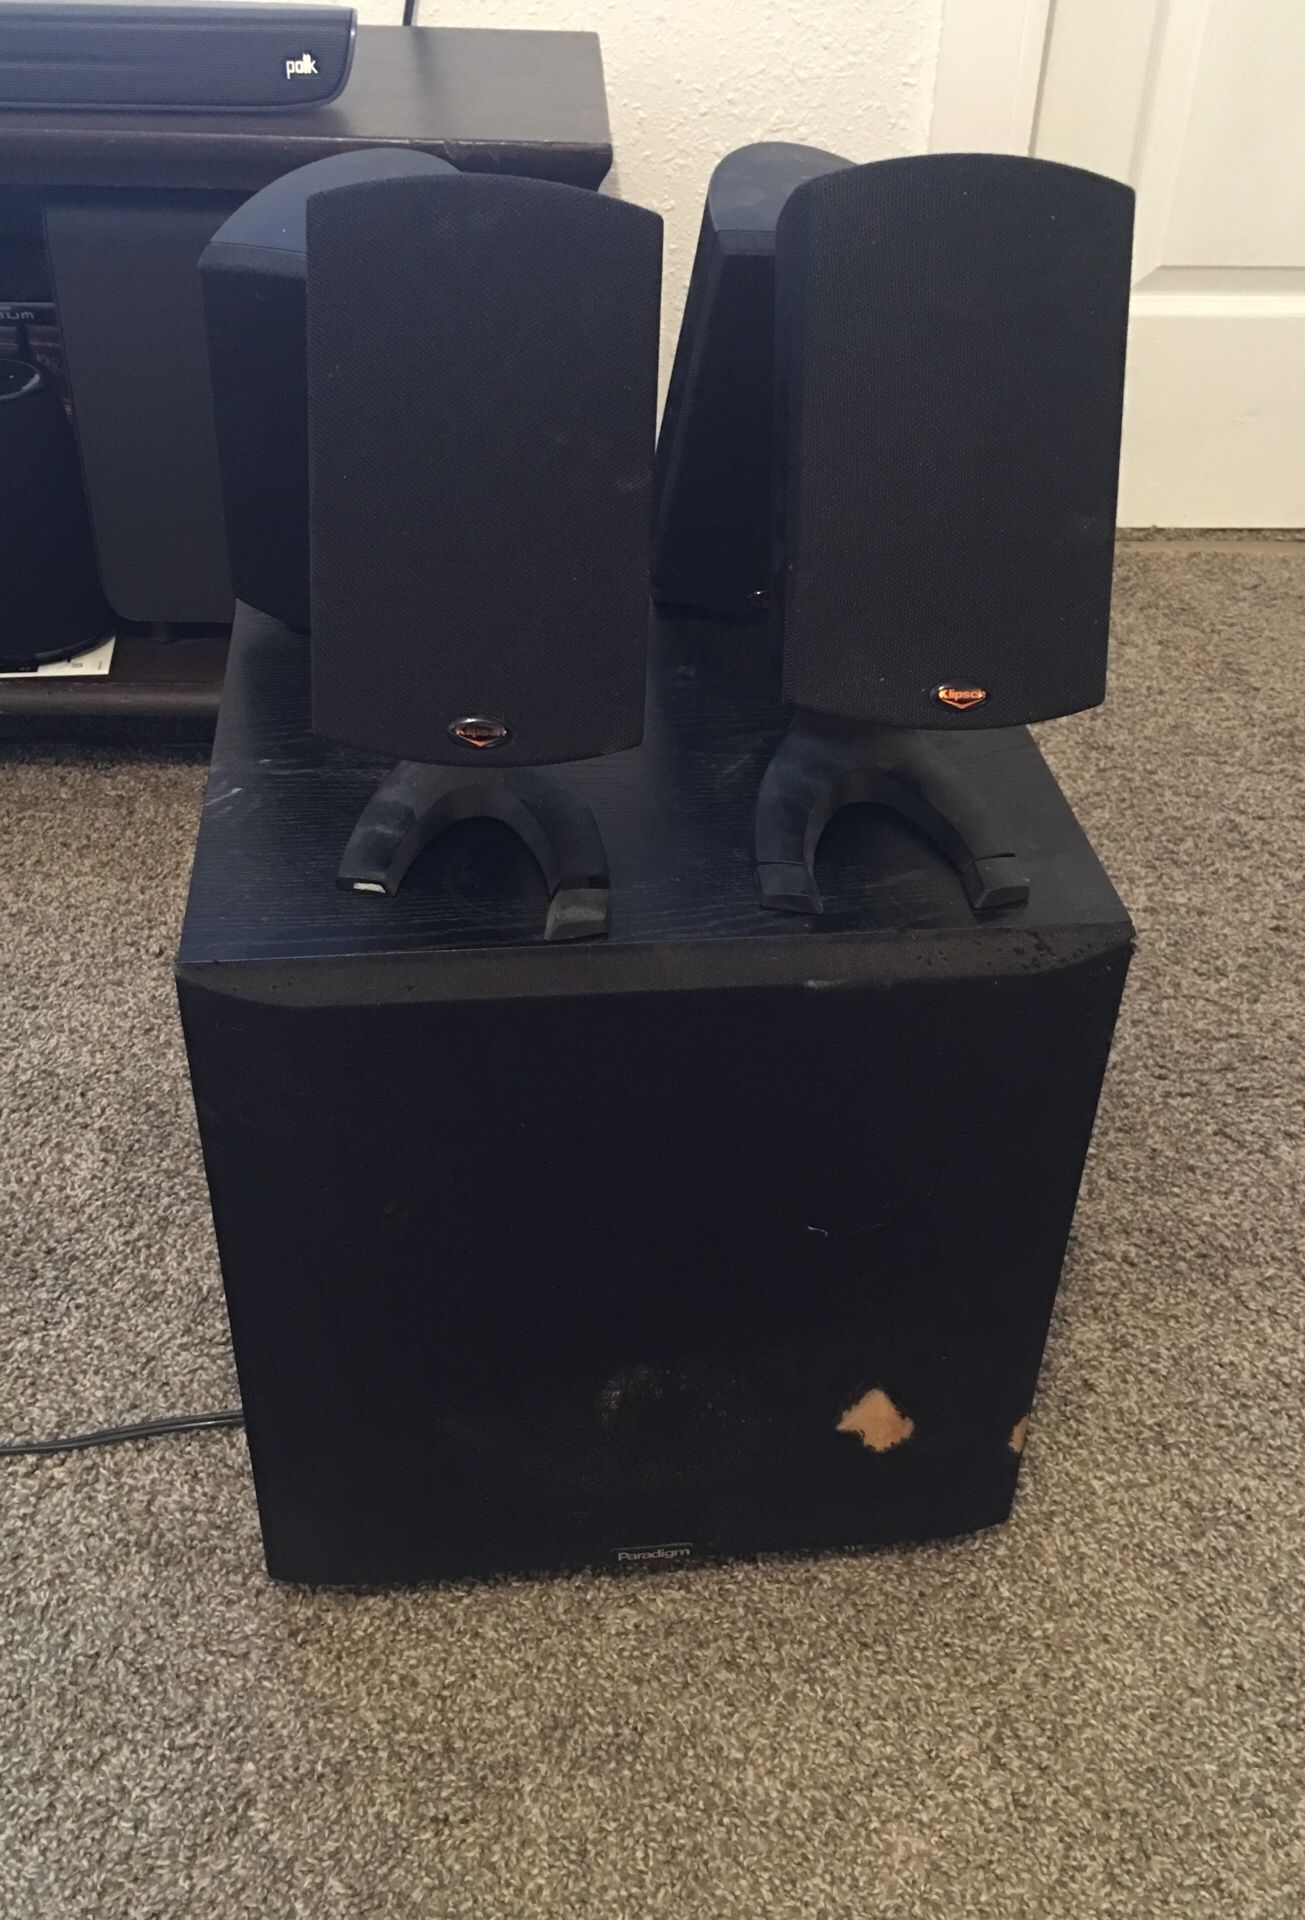 Klipsch surround speakers and paradigm powered sub